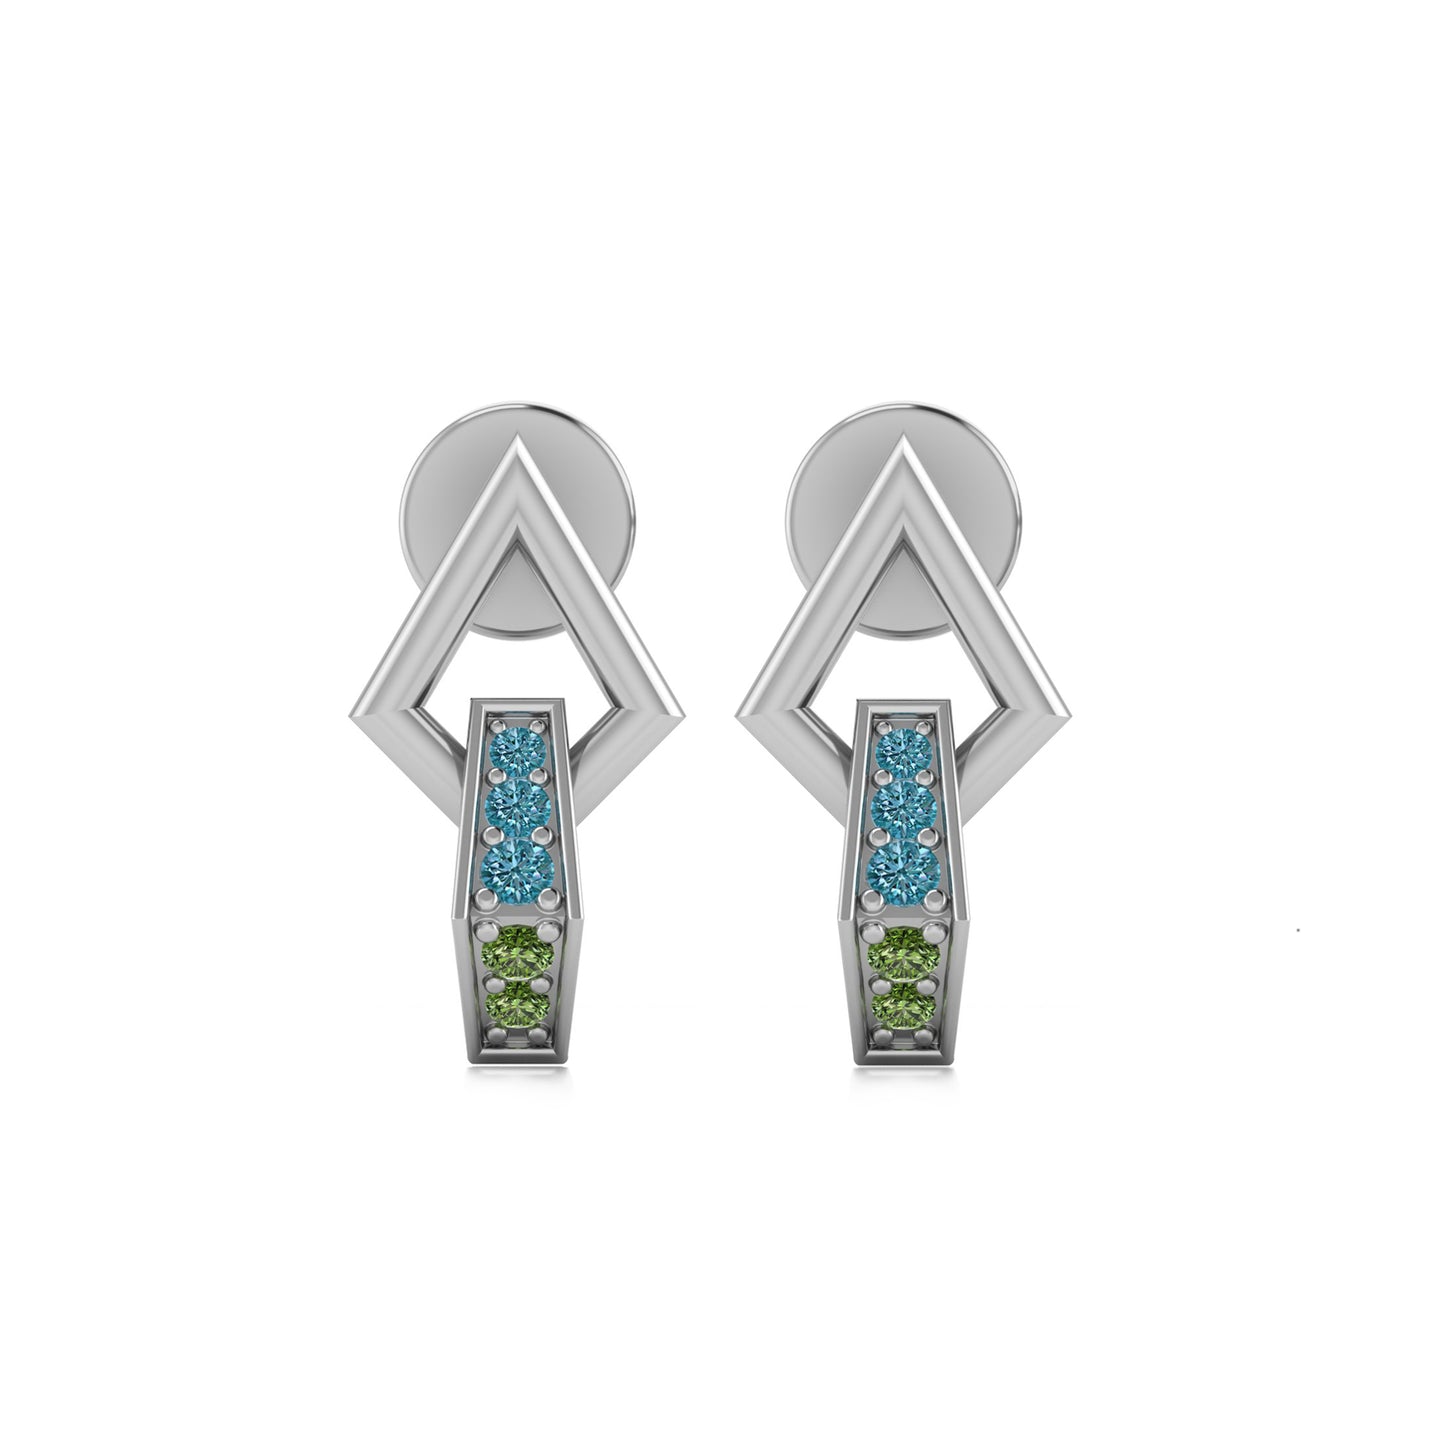 Dual Hue Delight: Deltoid Duet Earrings | House of Hue